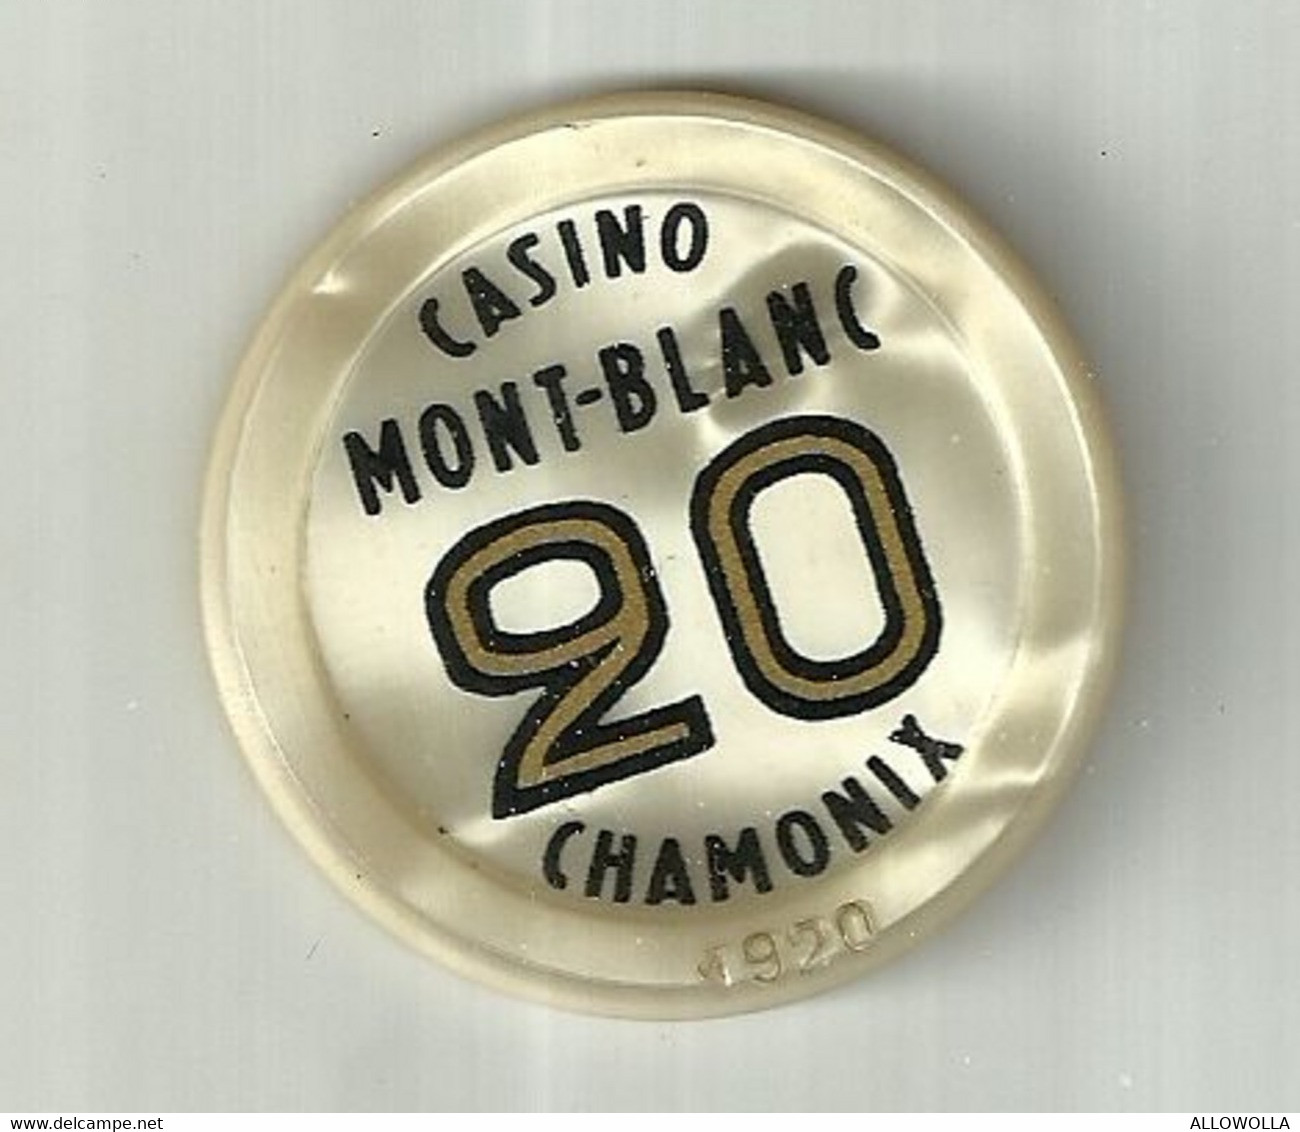 9882" FICHES-CHIPS-CASINO MONT BLANC-CHAMONIX-20 FRANCHI" " - Casino